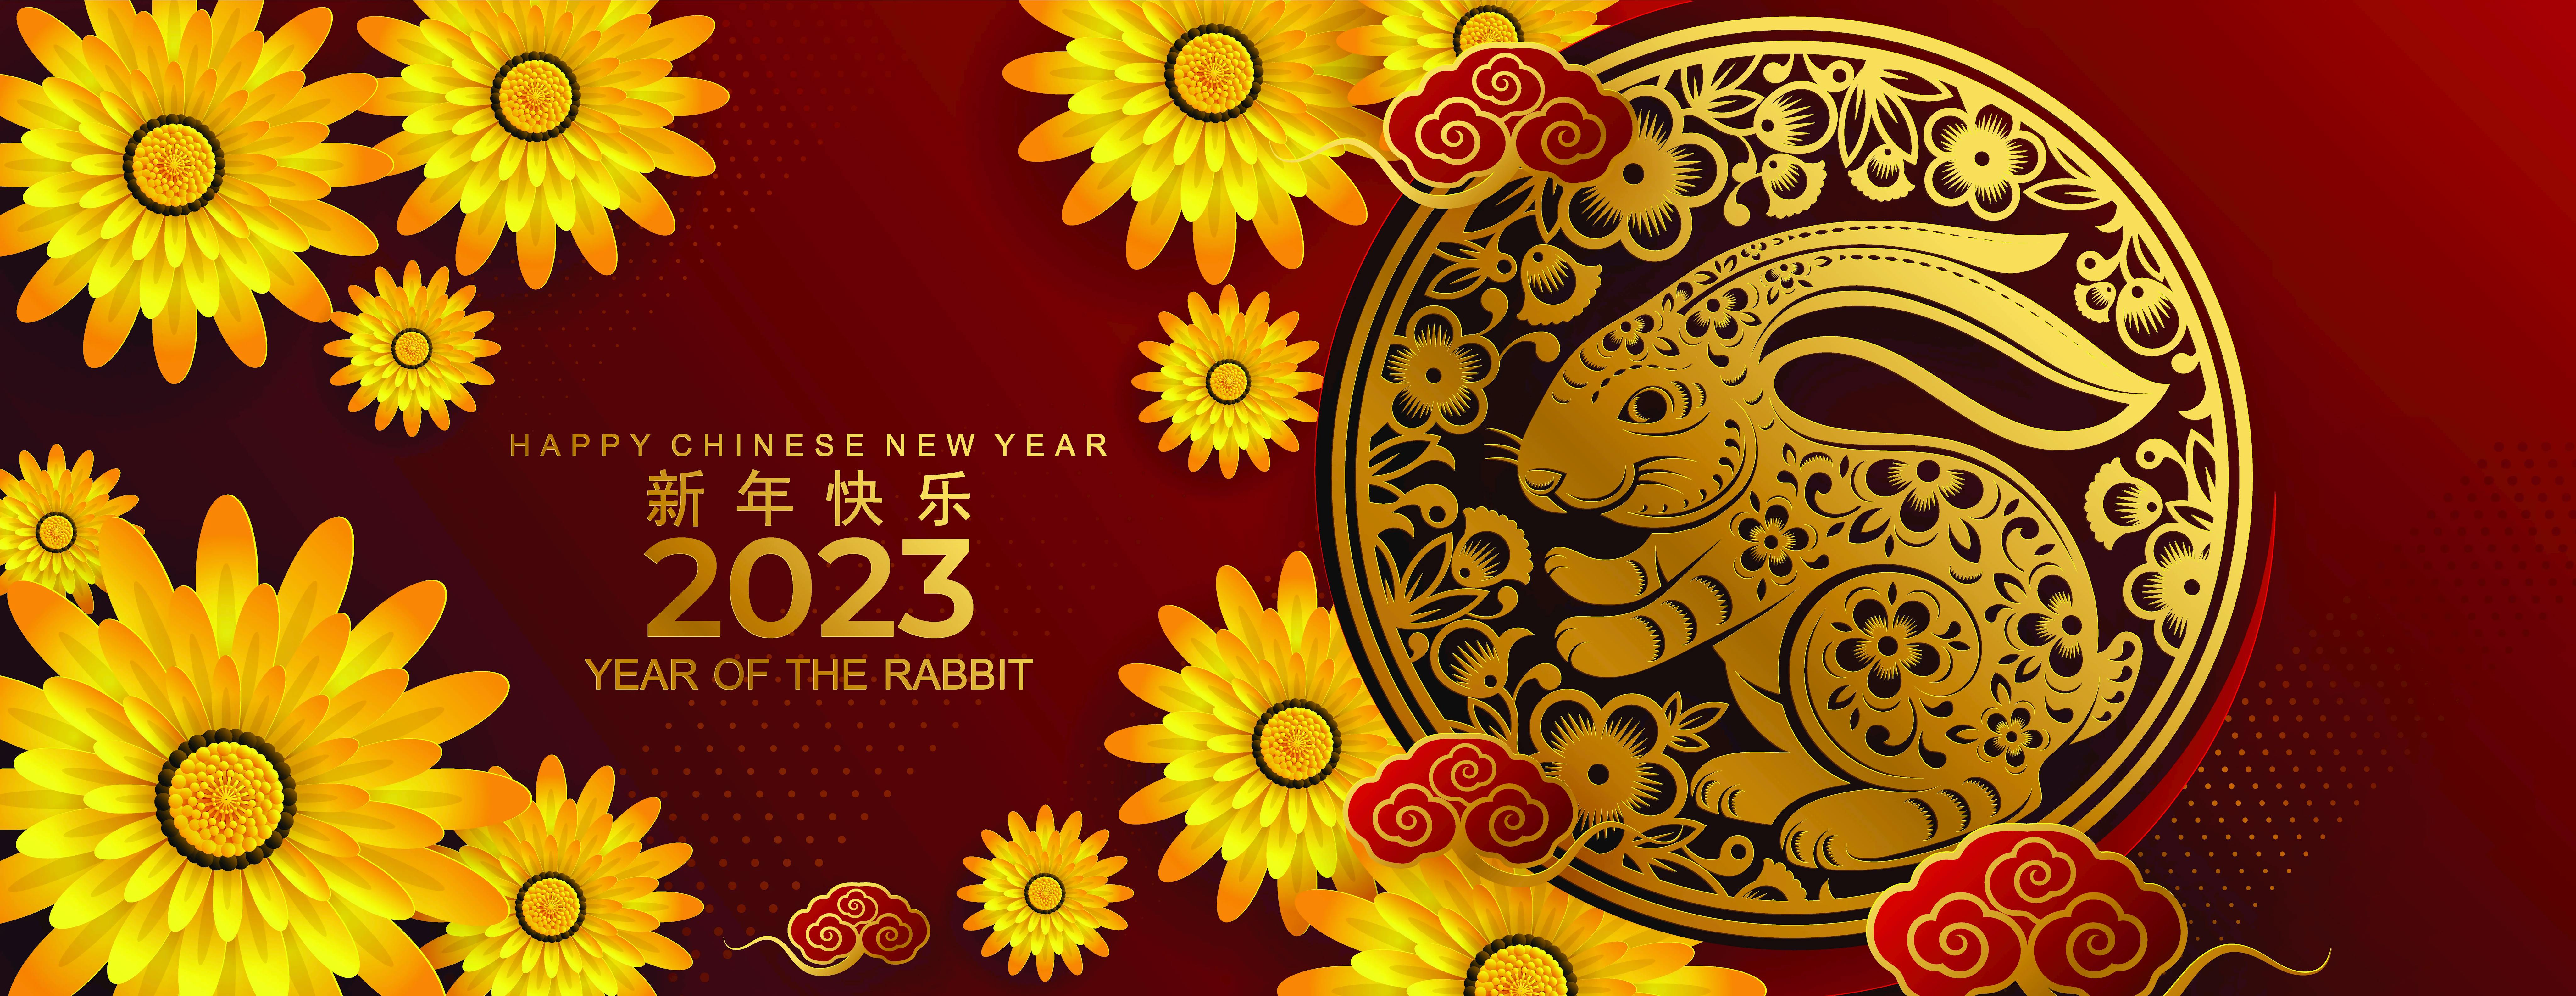 Celebrating Lunar New Year in 2023